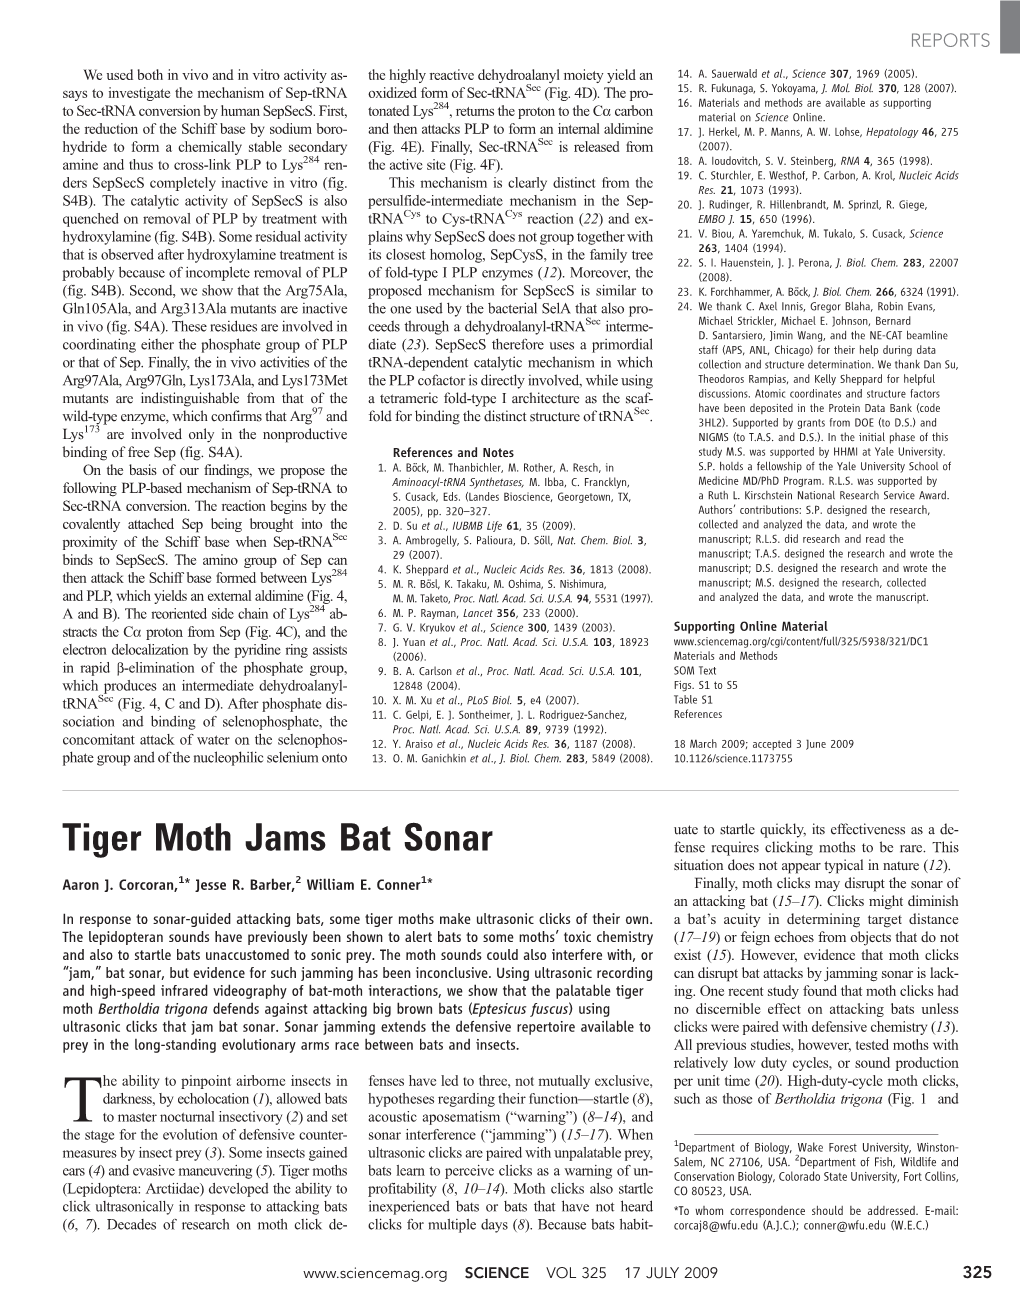 Tiger Moth Jams Bat Sonar Fense Requires Clicking Moths to Be Rare